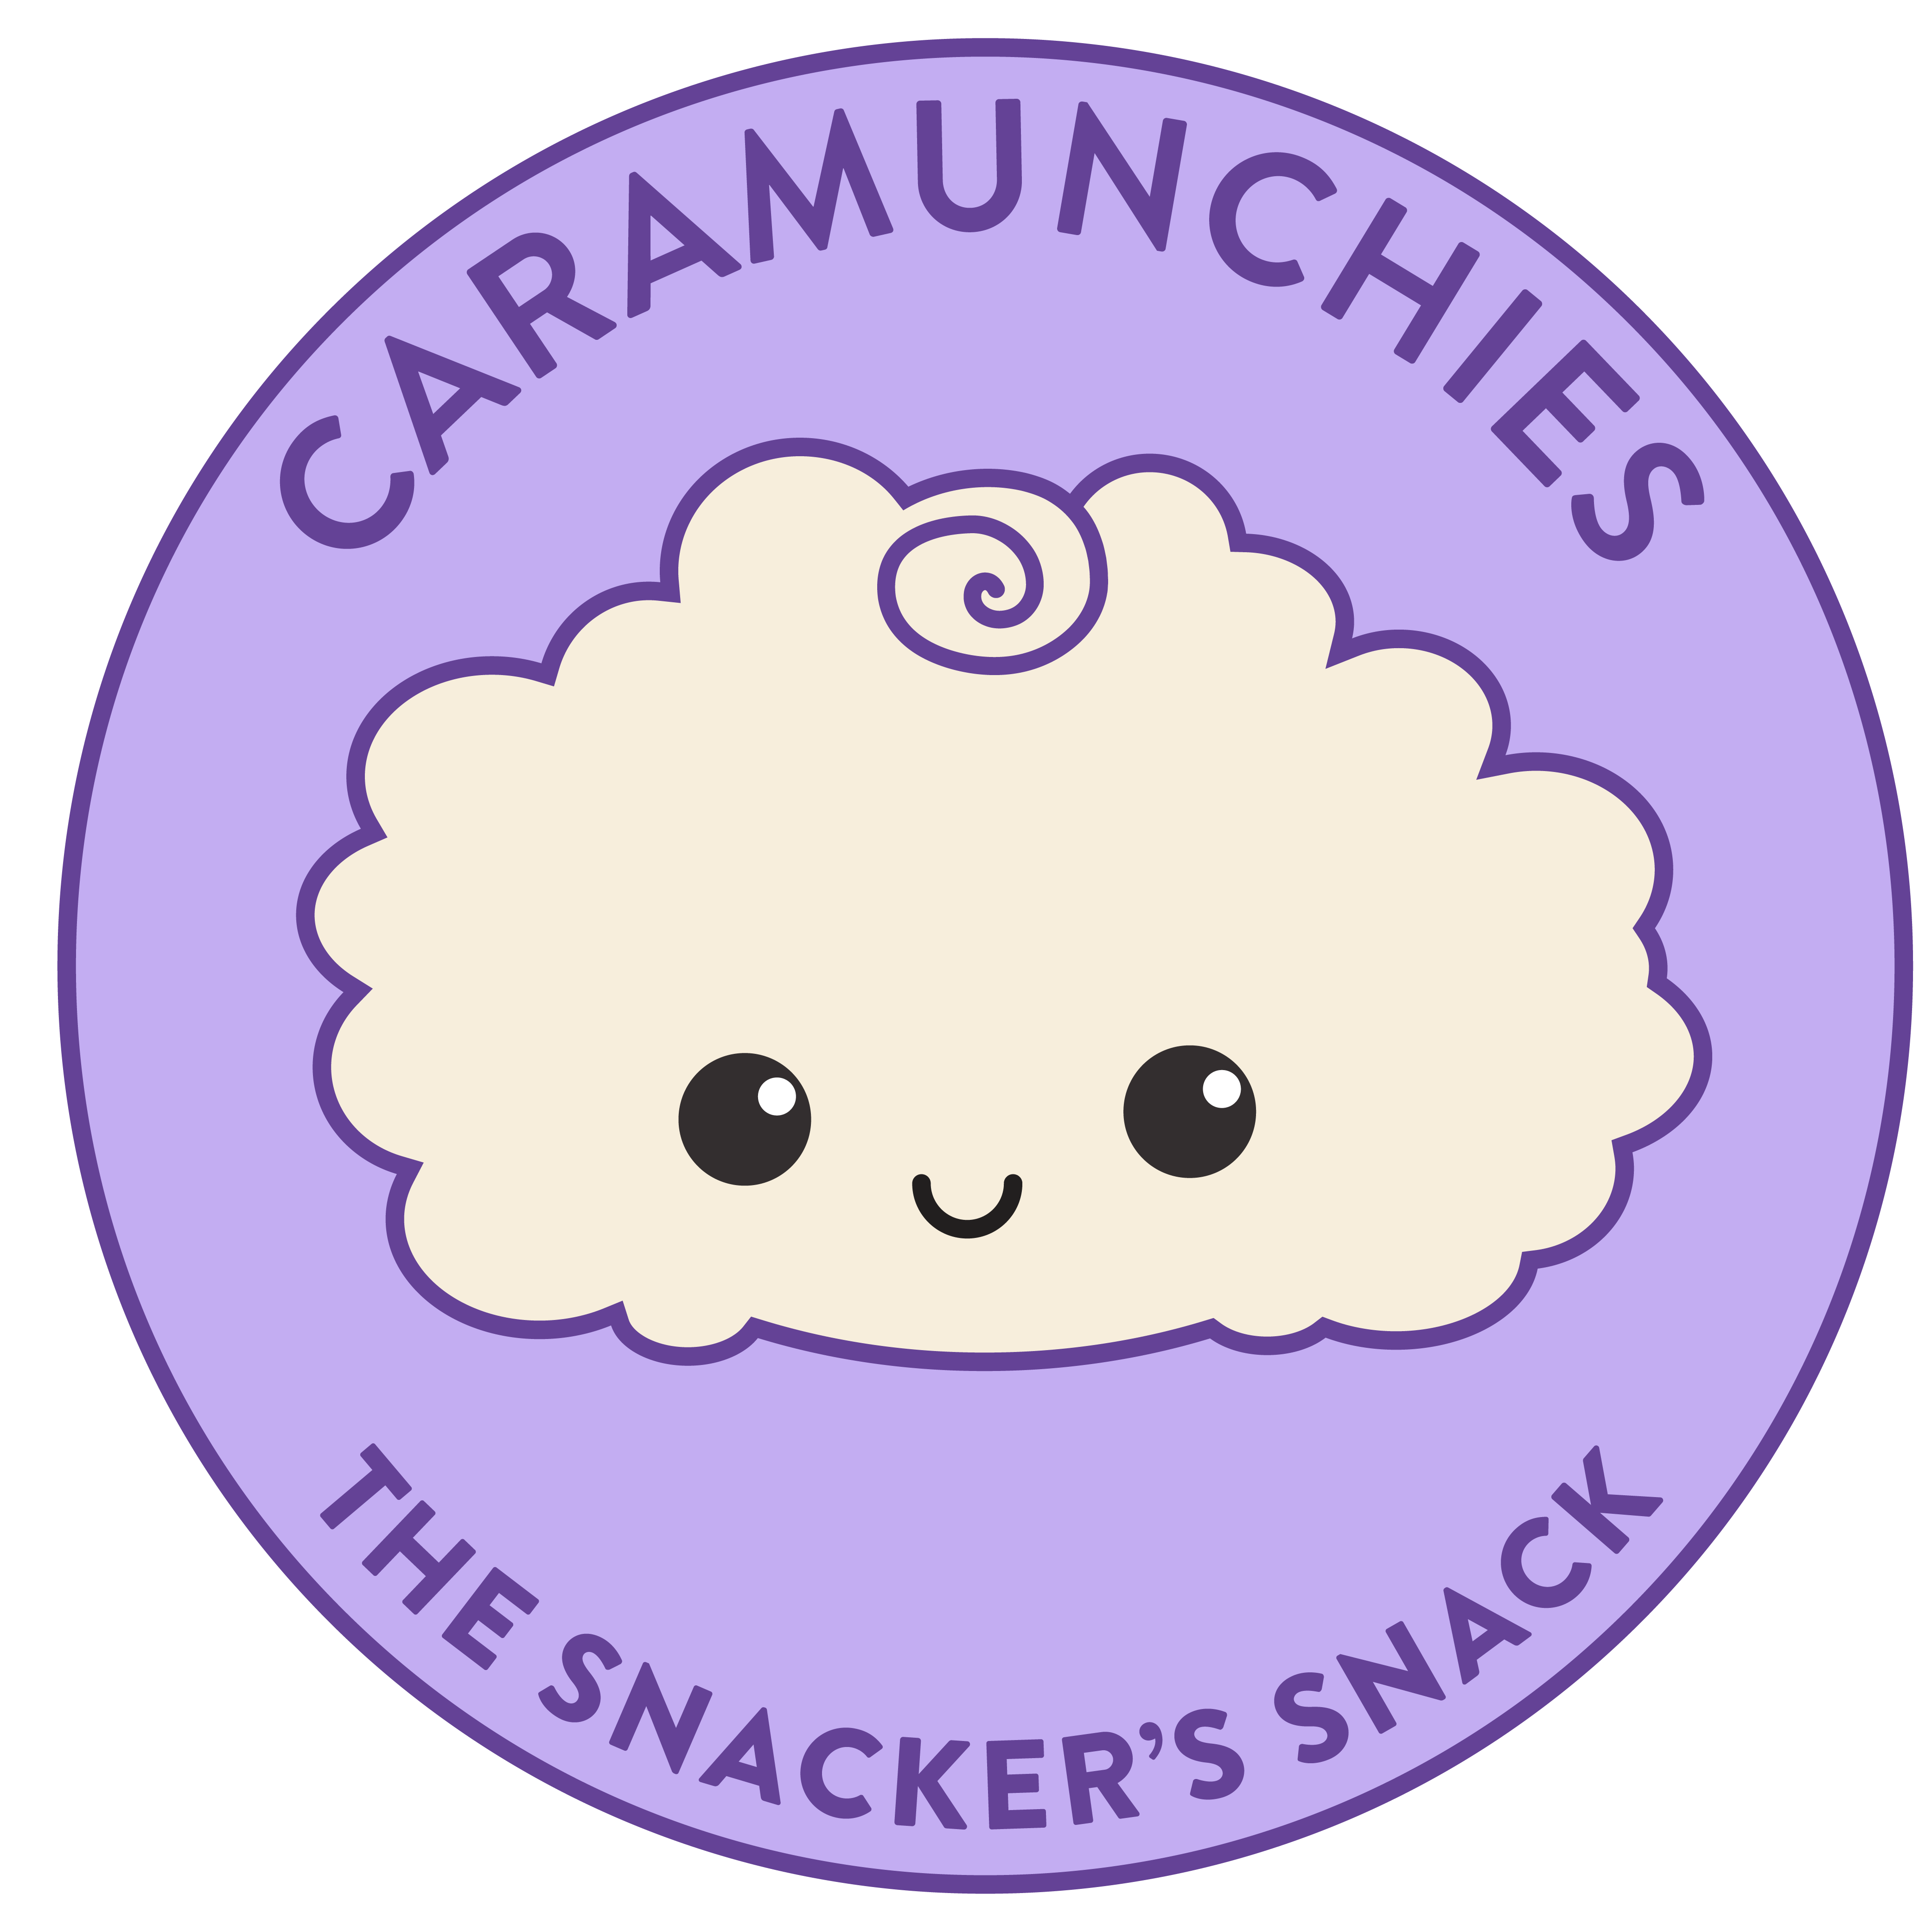 caramunchies logo